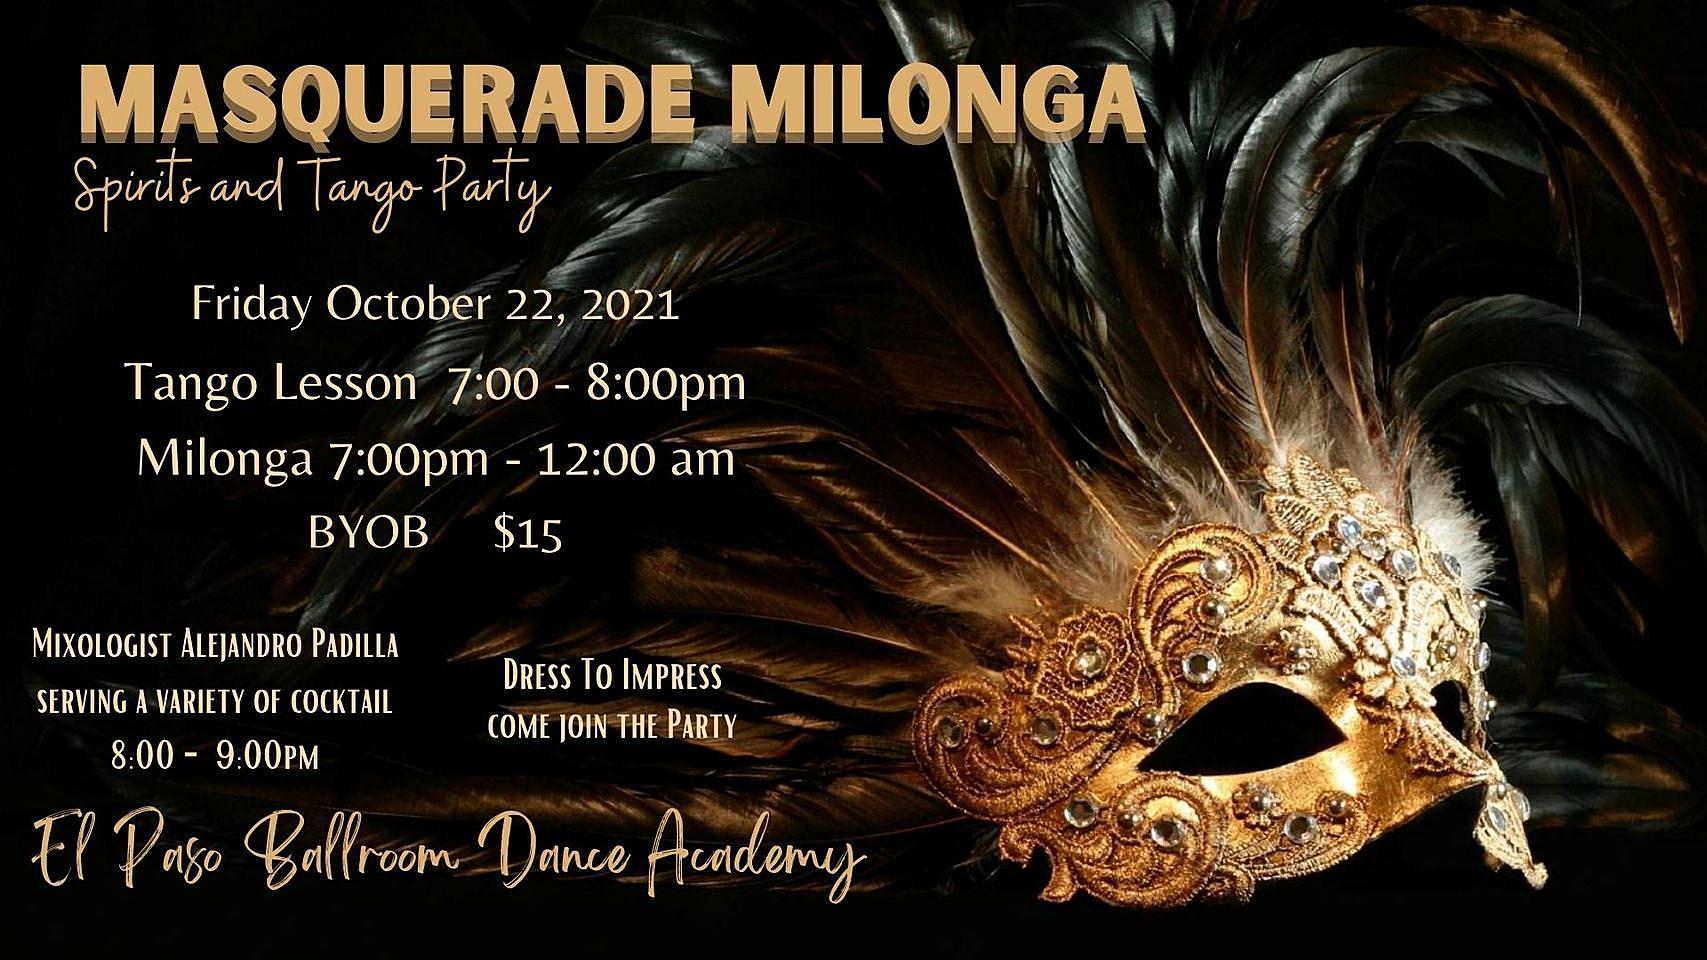 Vampire Masquerade Ballroom Dancing - Vampire Masquerade Ball